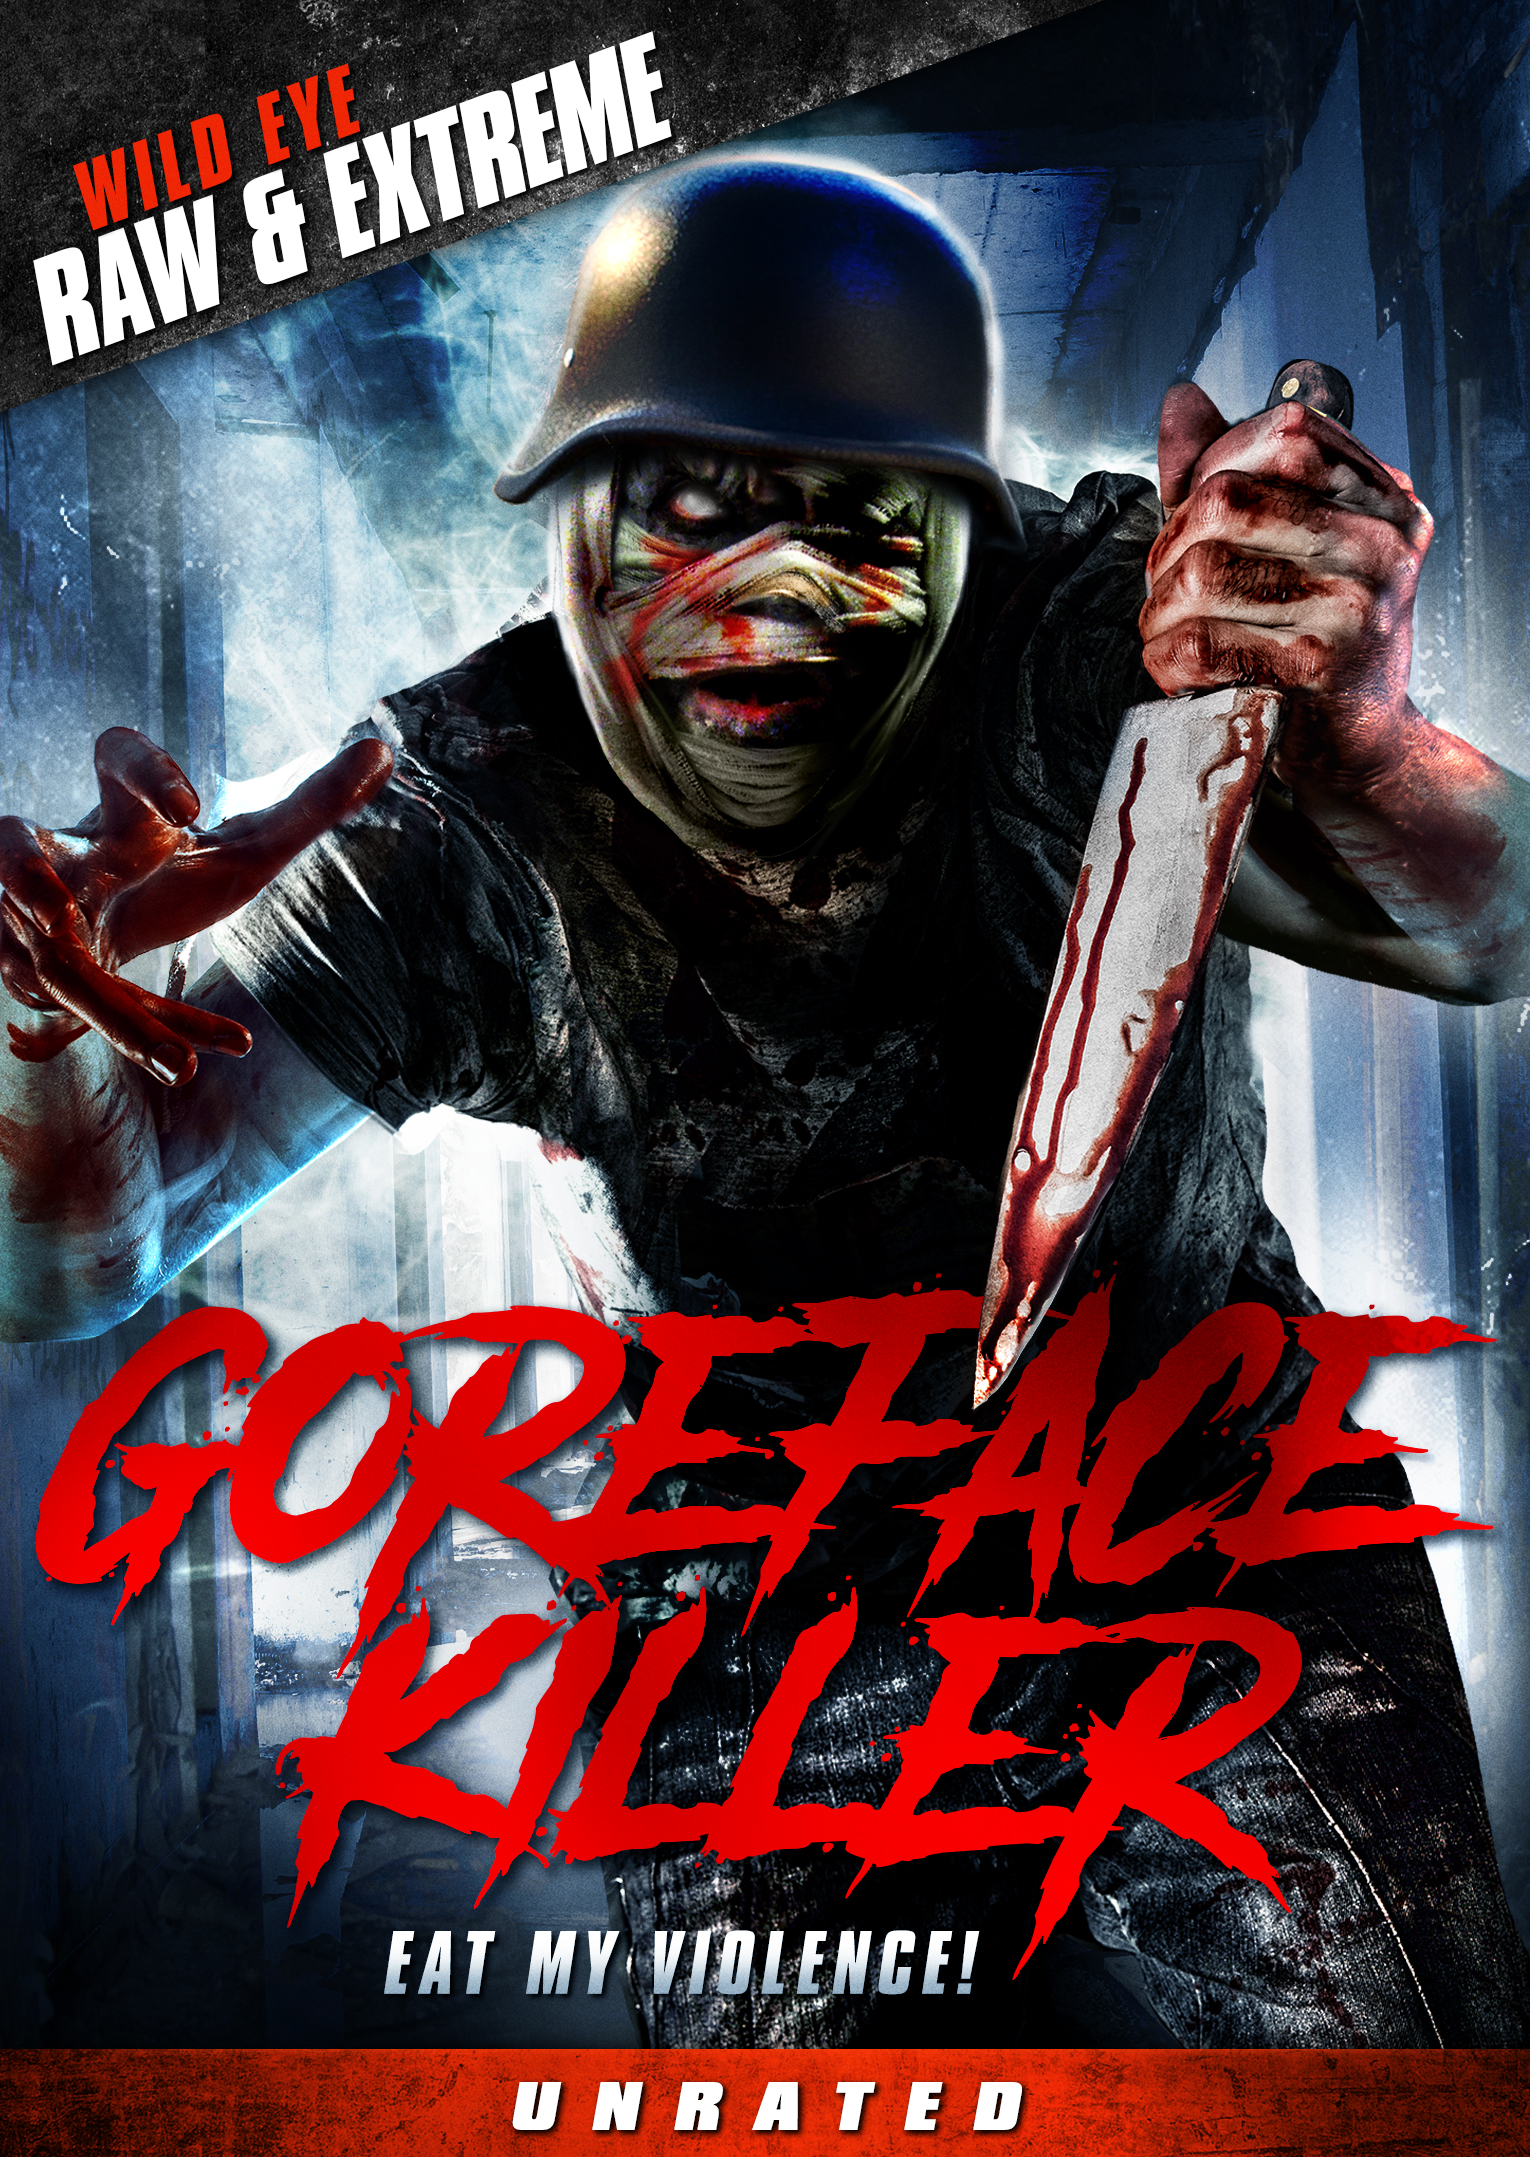 Goreface Killer (2002) Screenshot 1